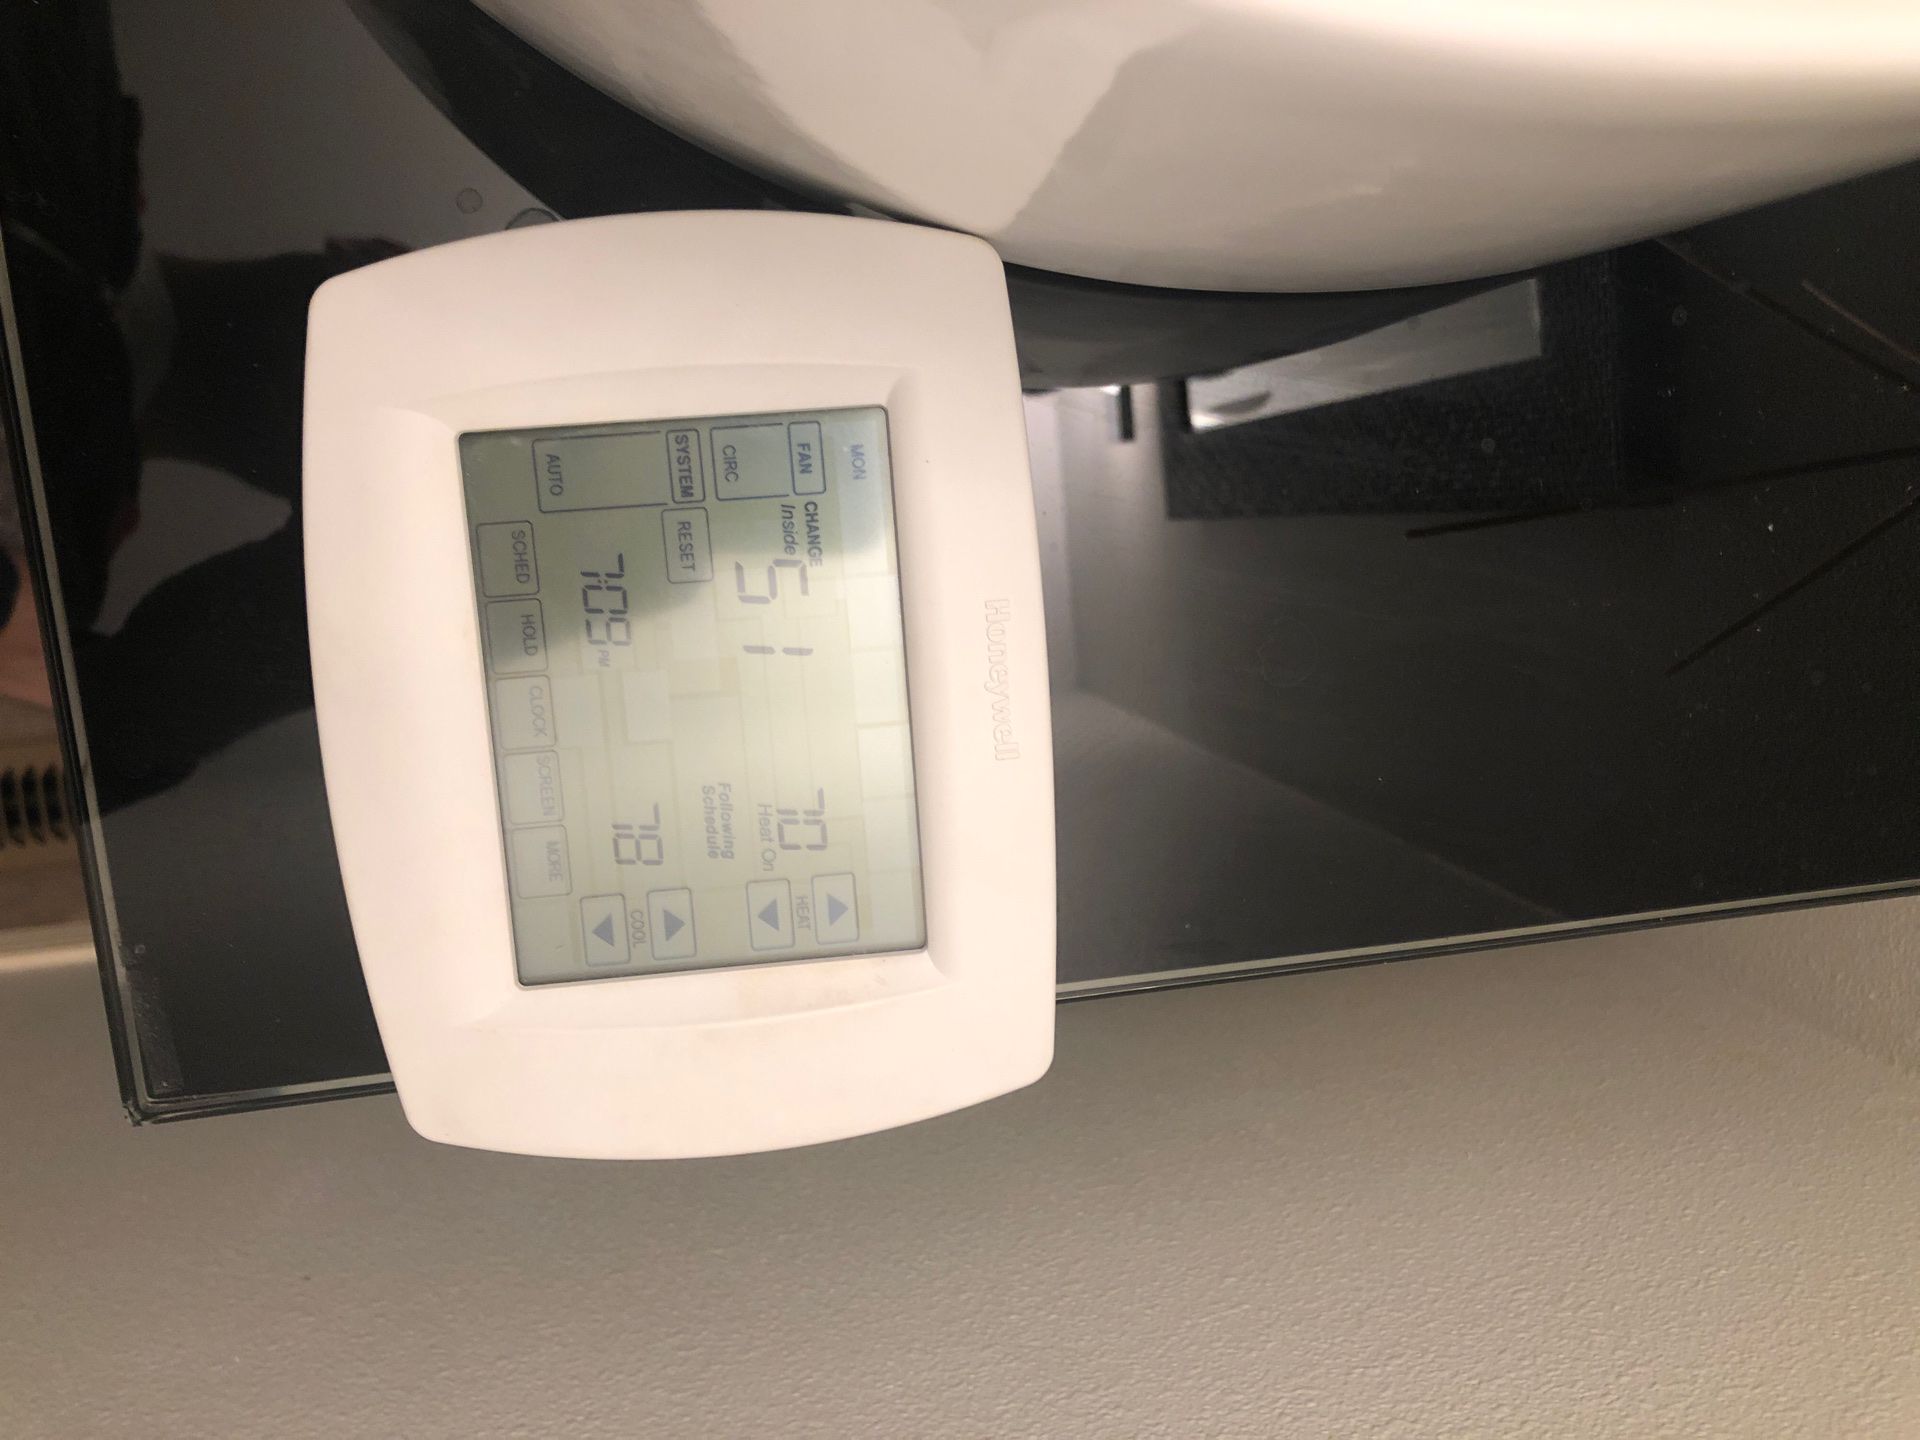 Honeywell thermostat programmable